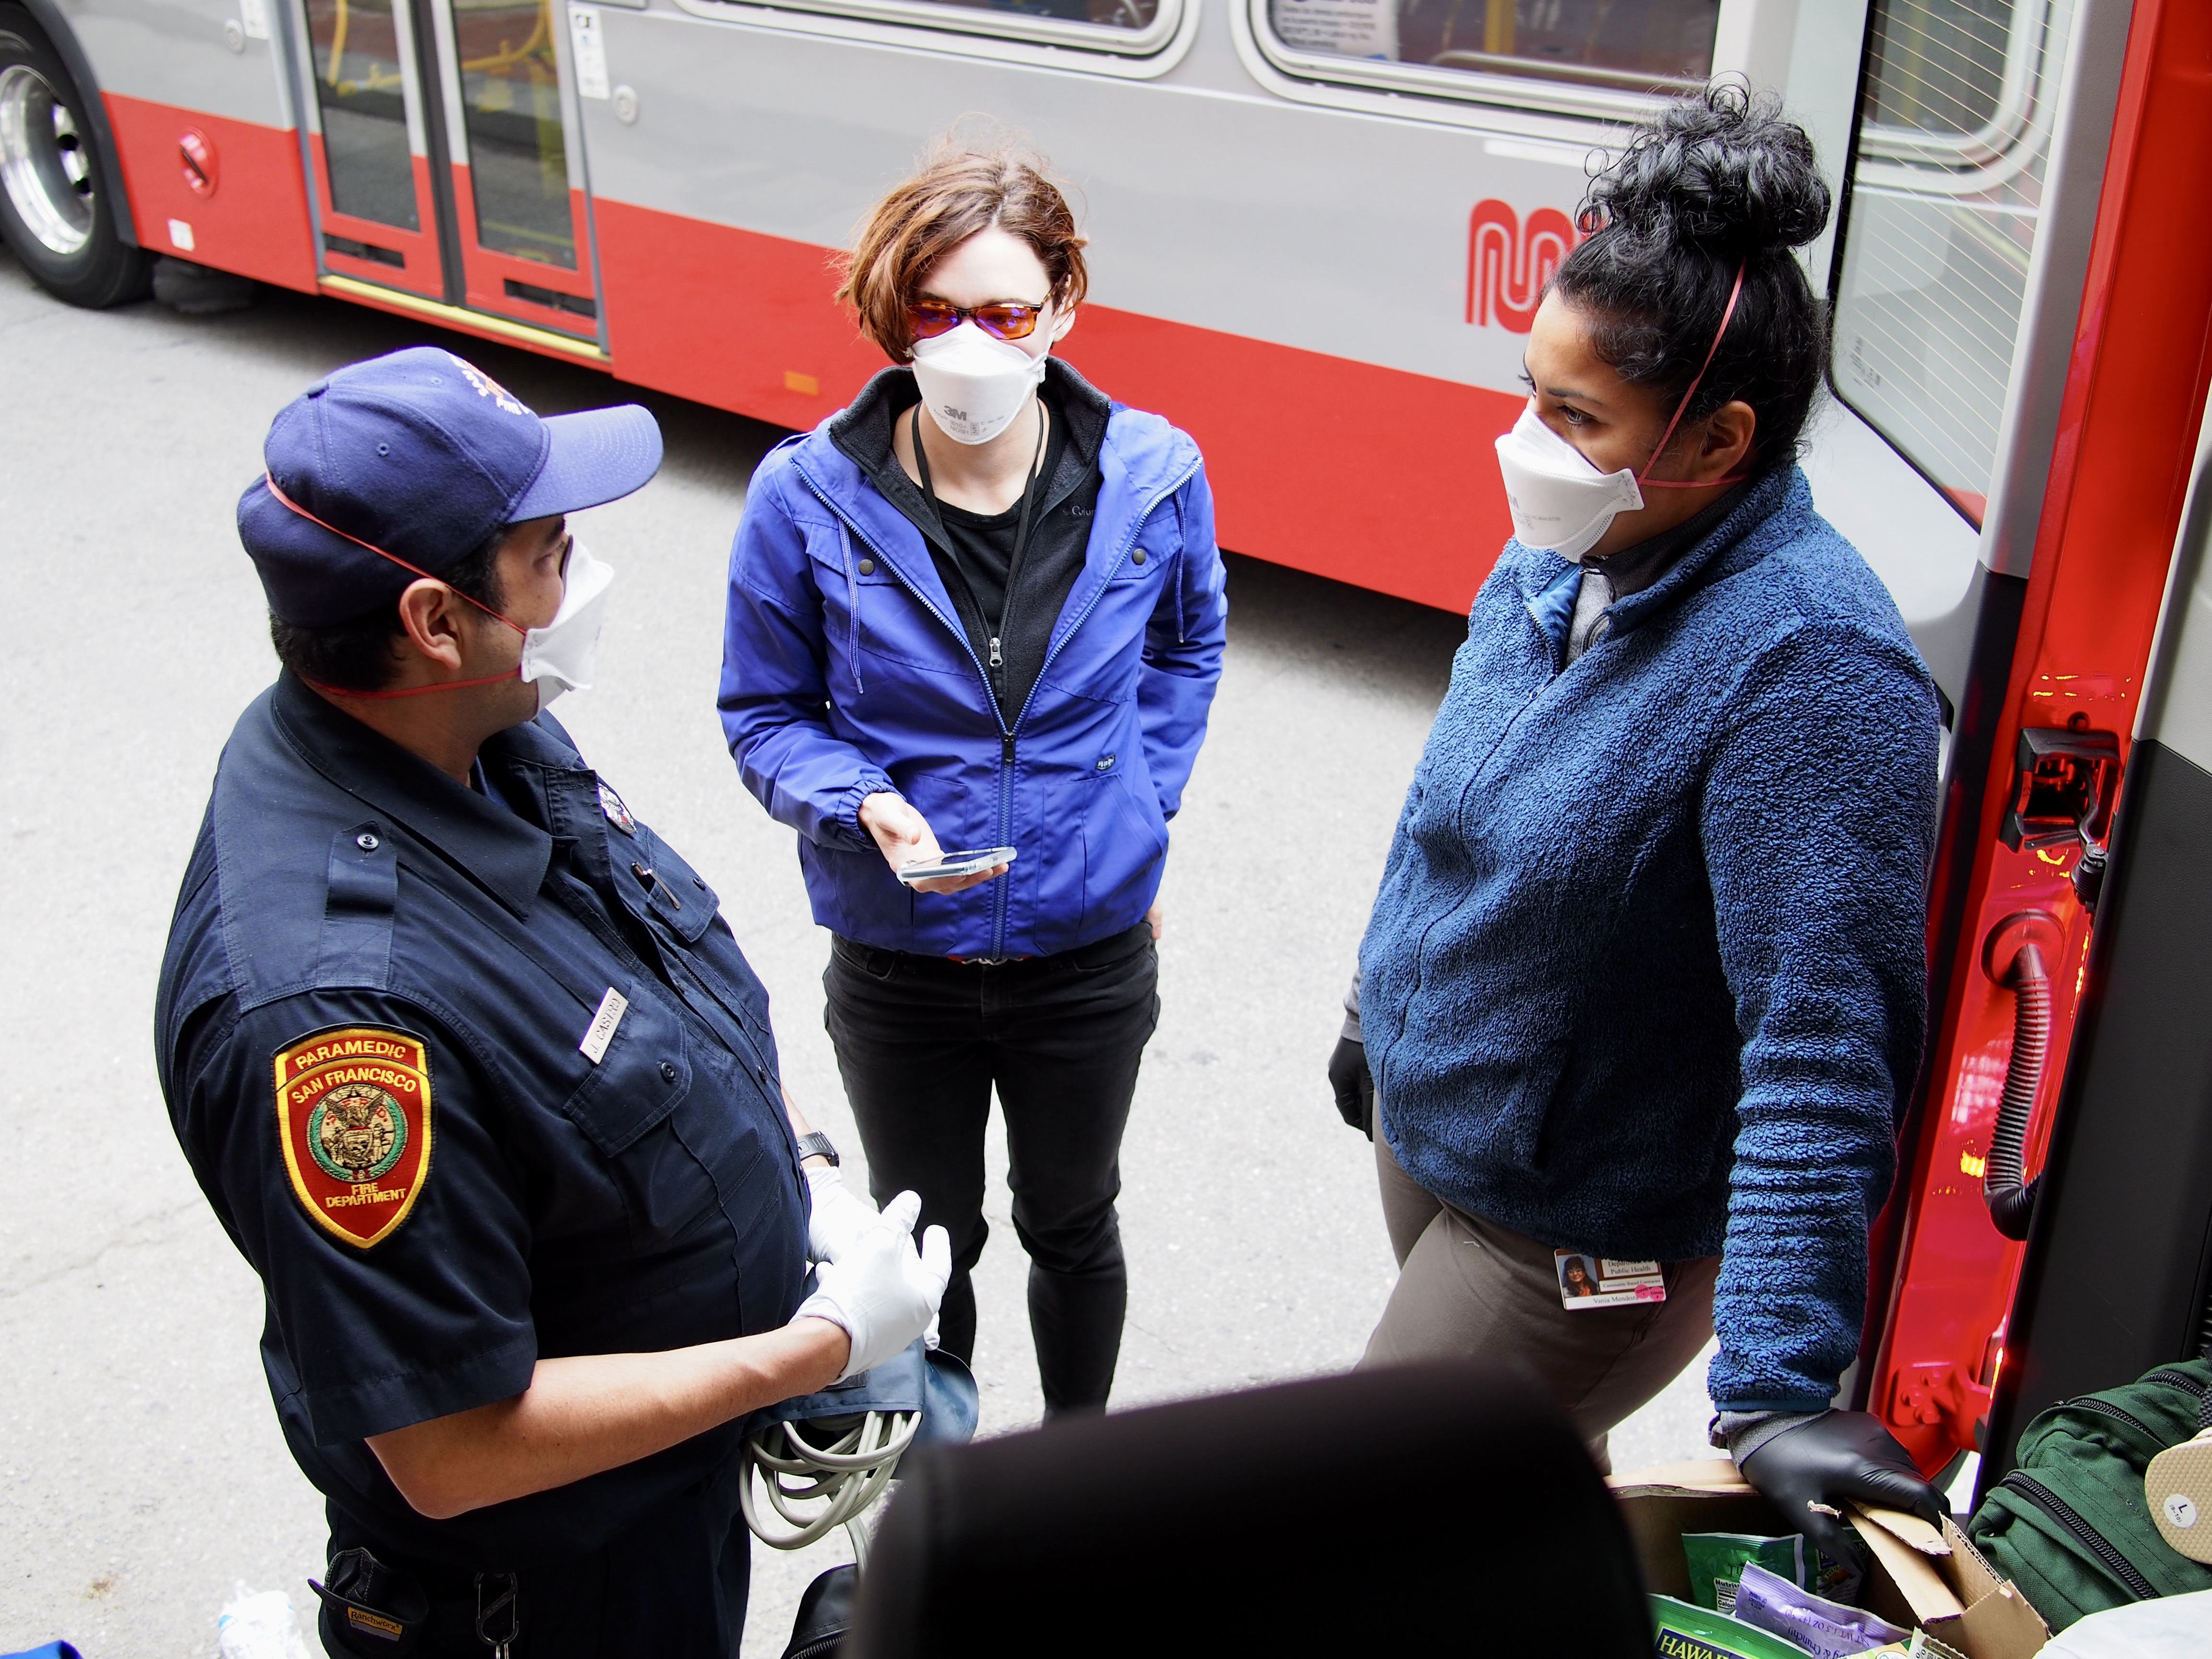 Three members of street crisis response team